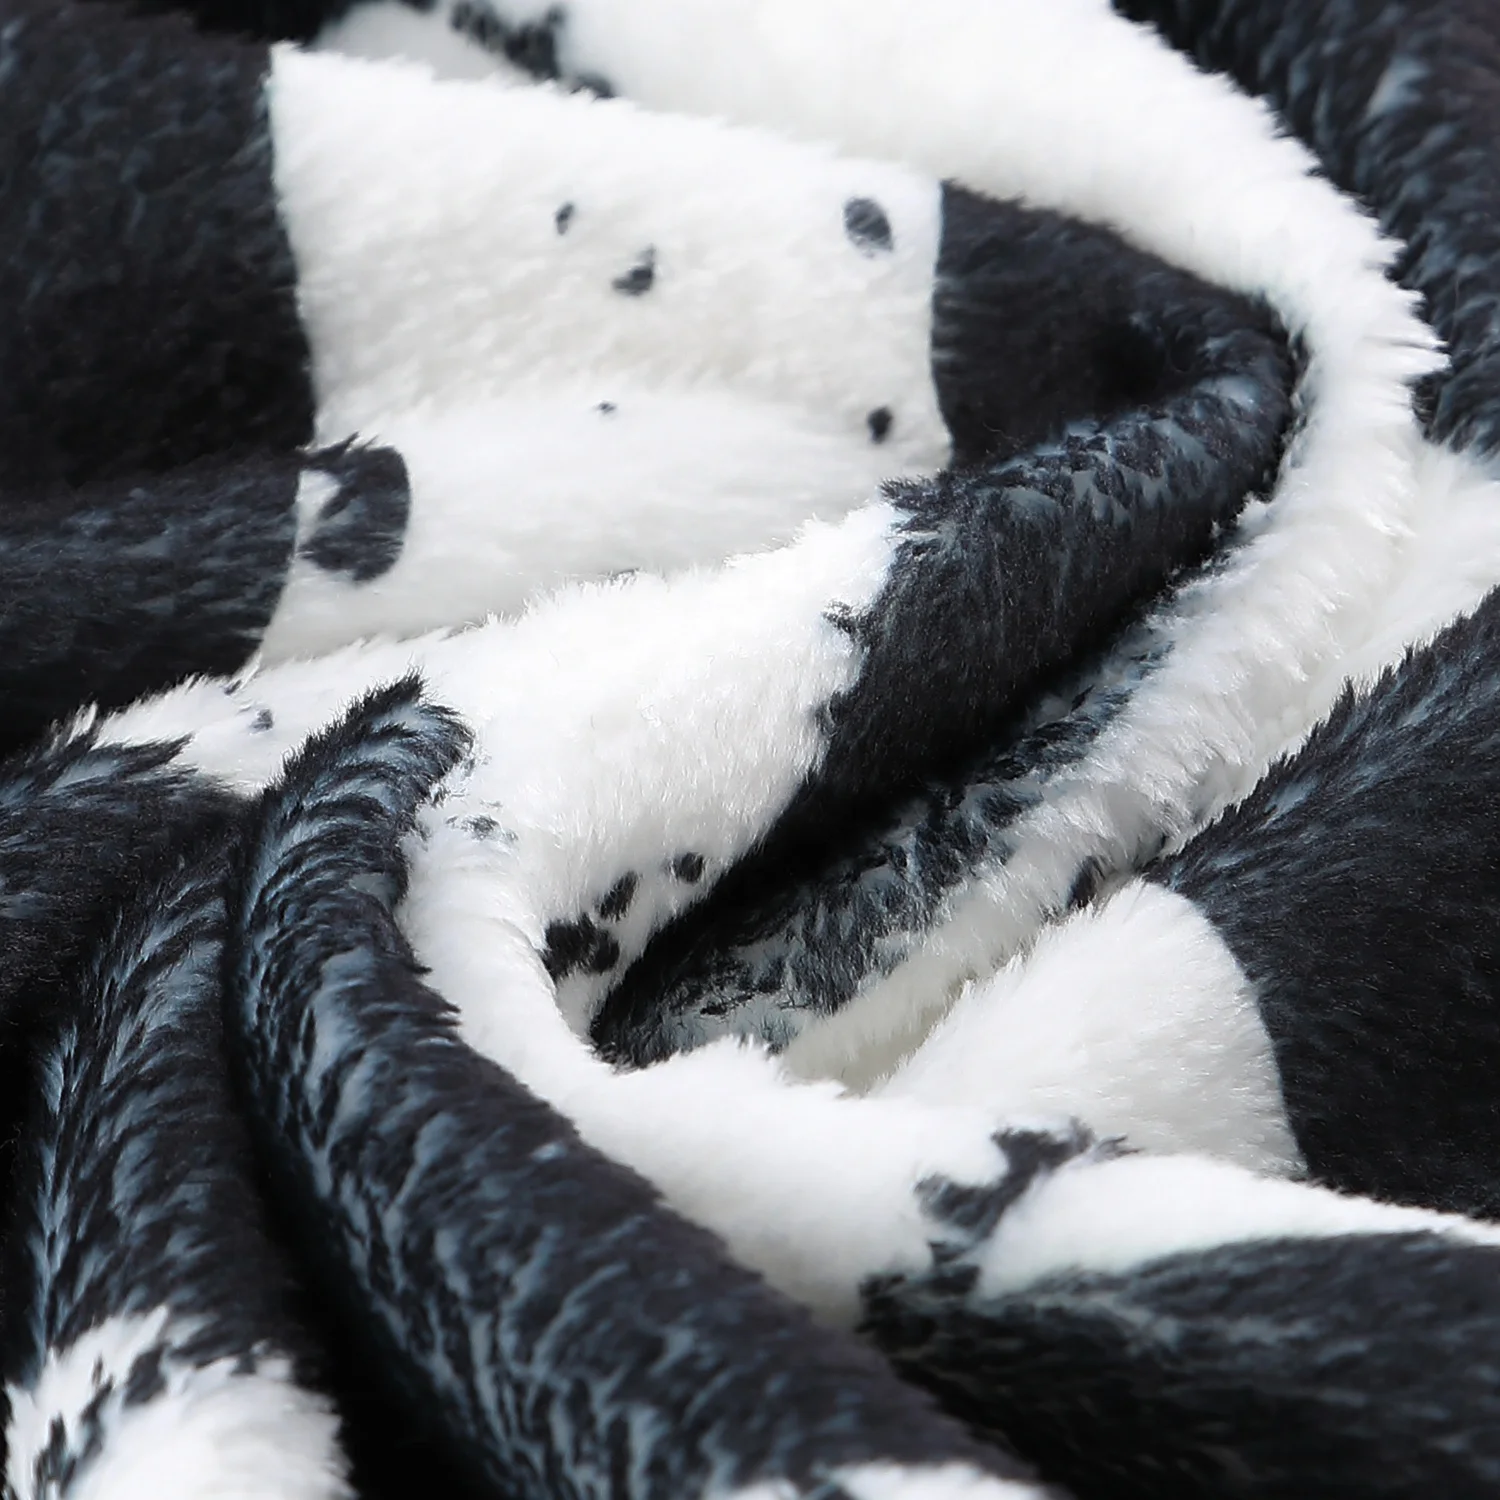 OEM ODM Custom Fleece Blanket Embroidery Logo Winter Throw Blankets Home Office Portable Luxury Blanket